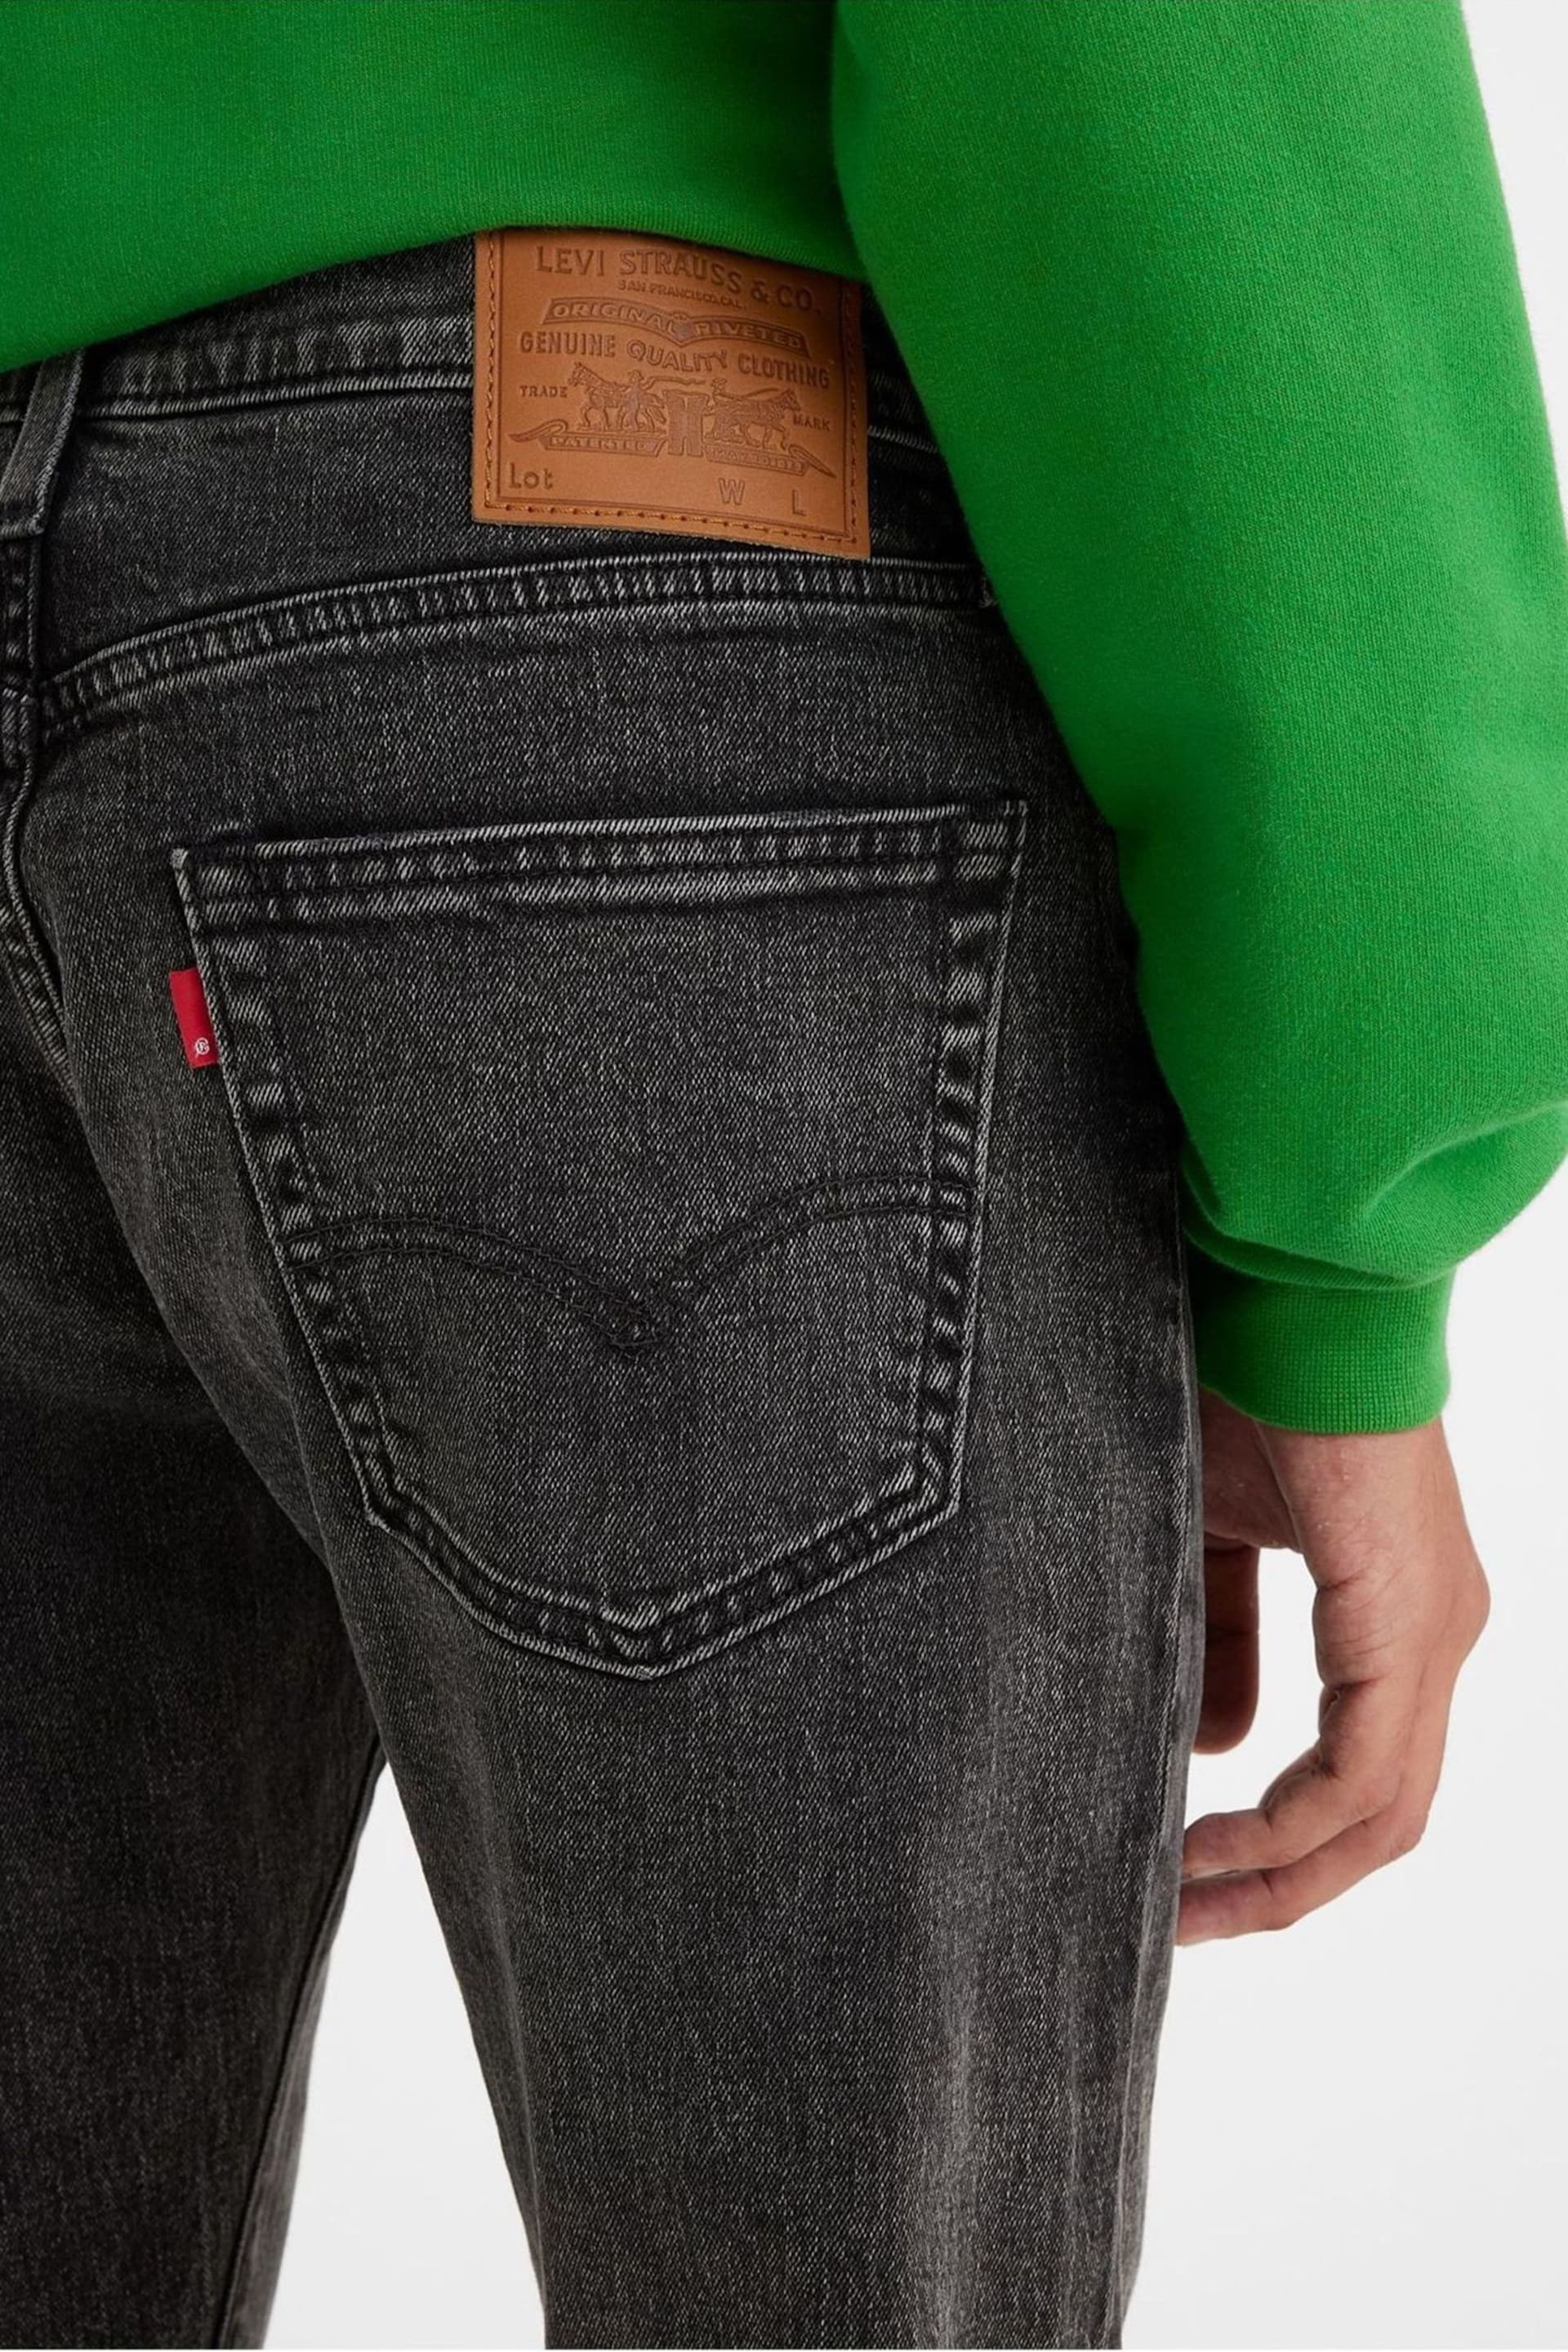 Levi's® Black 502™ Taper Jeans - Image 2 of 5